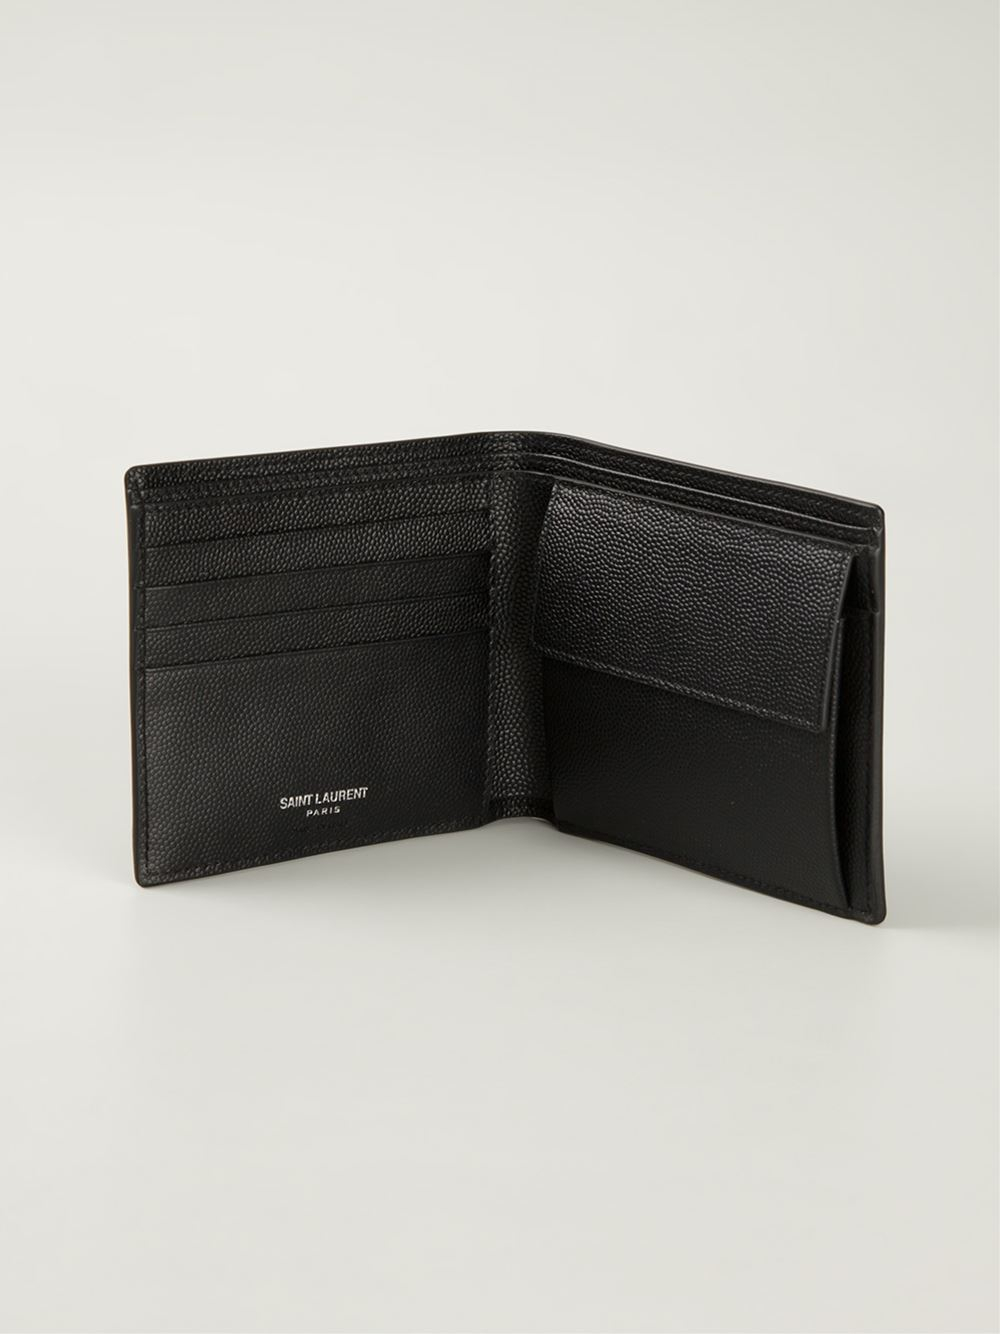 CARTIER, Paris 4 X 4 Cuirs Black Leather Bi-Fold MEN'S WALLET in BOX  R12-15